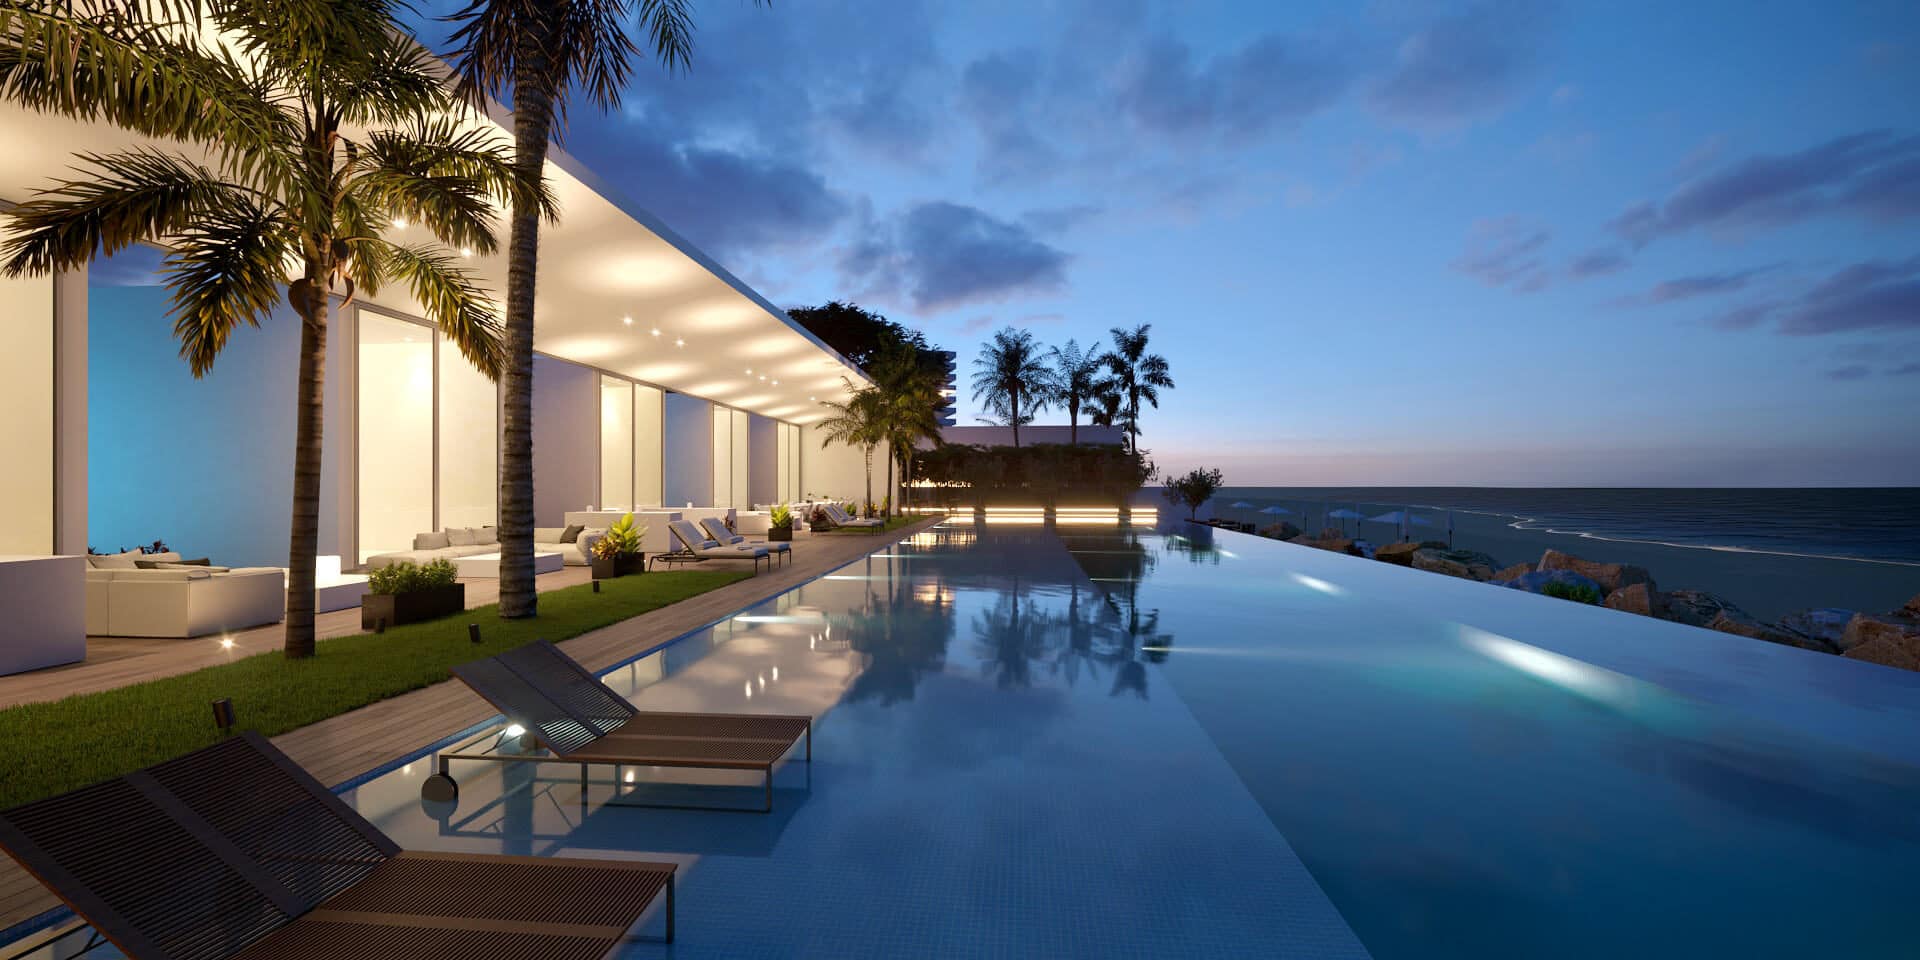 Seaside Villa - Ronen Bekerman - 3D Architectural Visualization ...